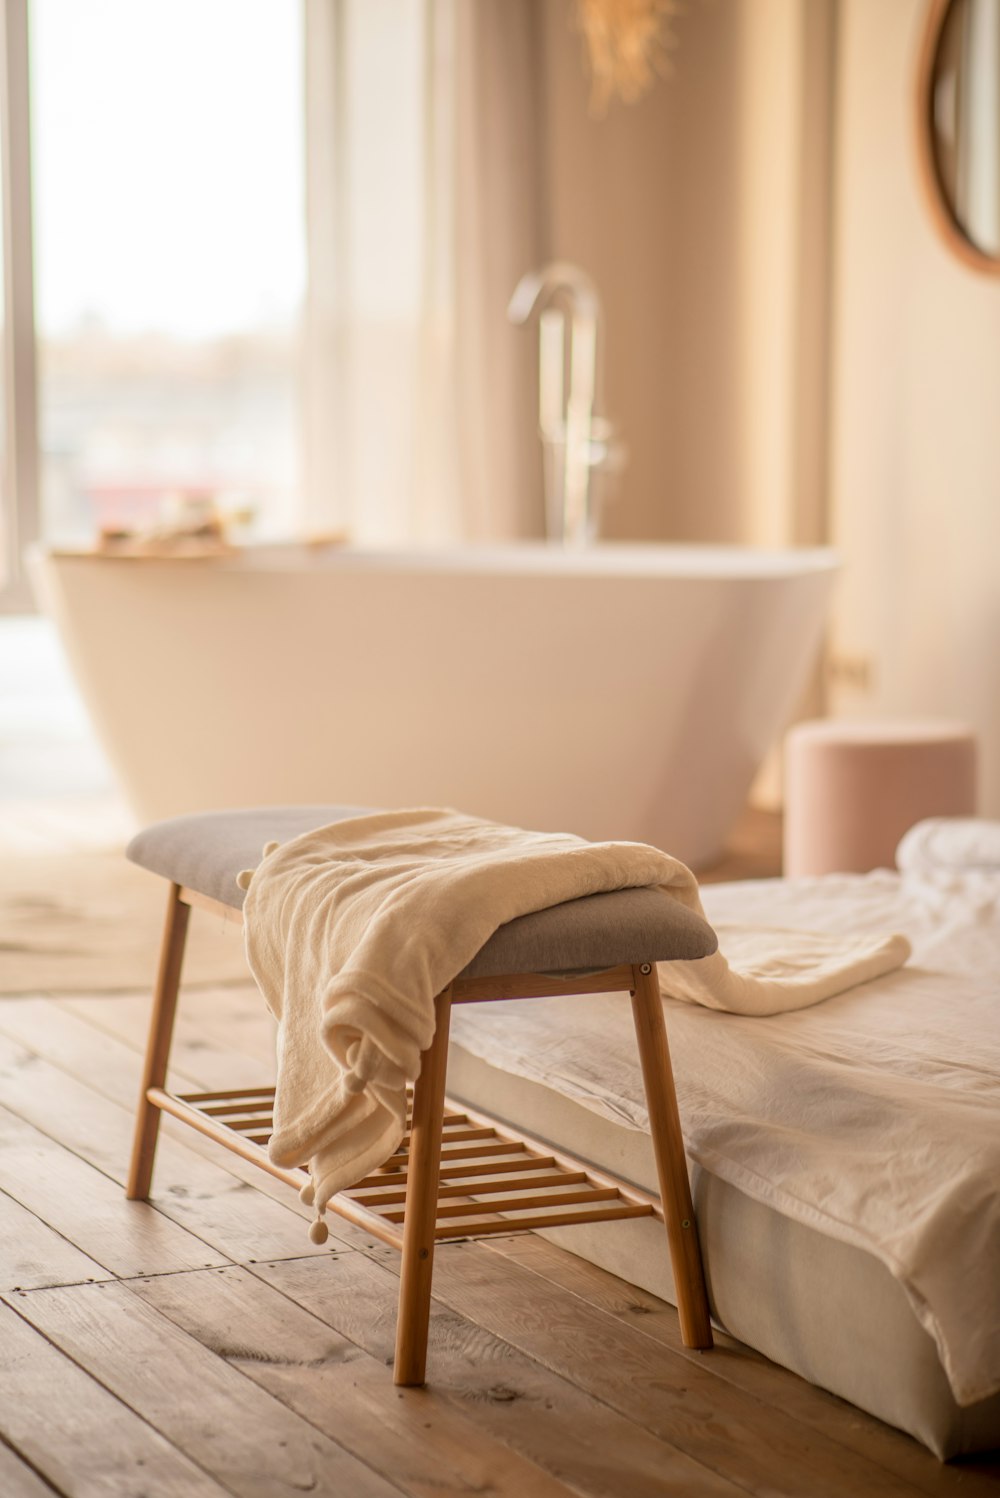 a white bath tub sitting next to a wooden floor